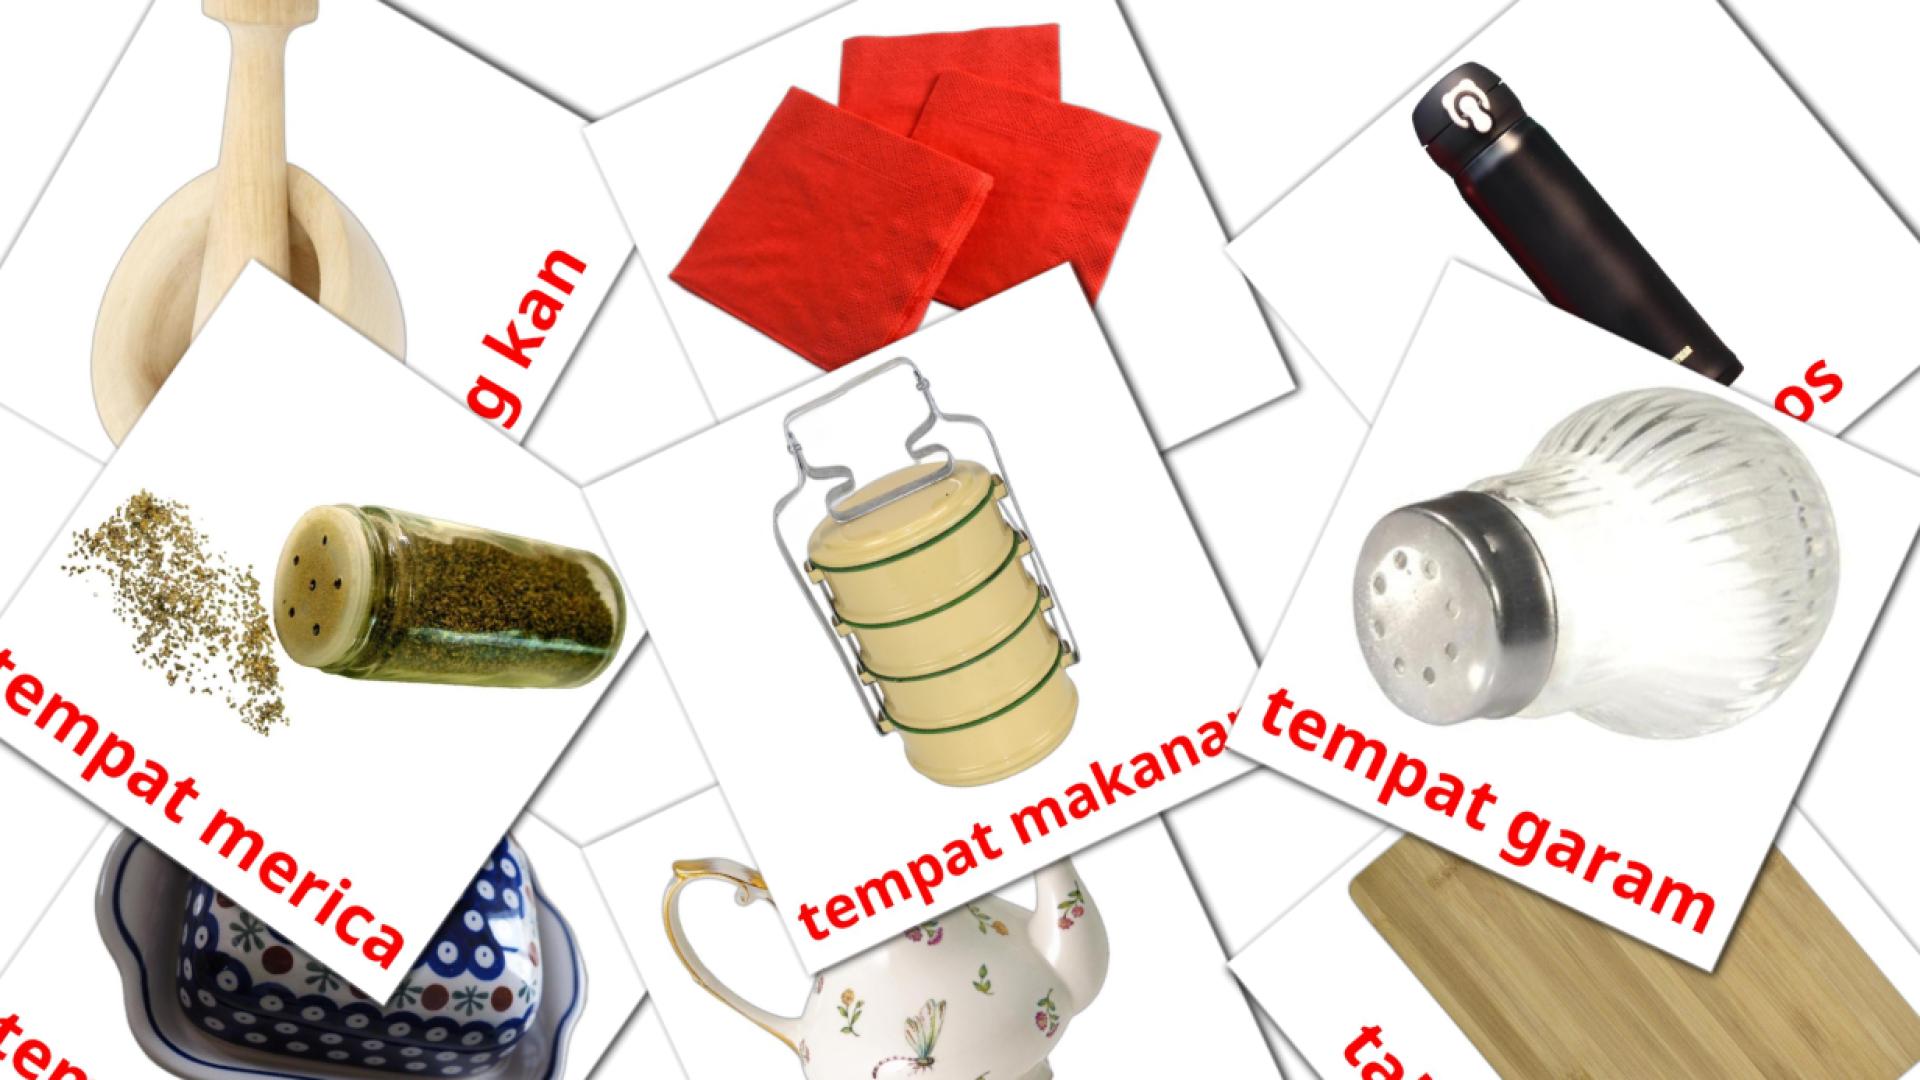 Dapur indonesian vocabulary flashcards